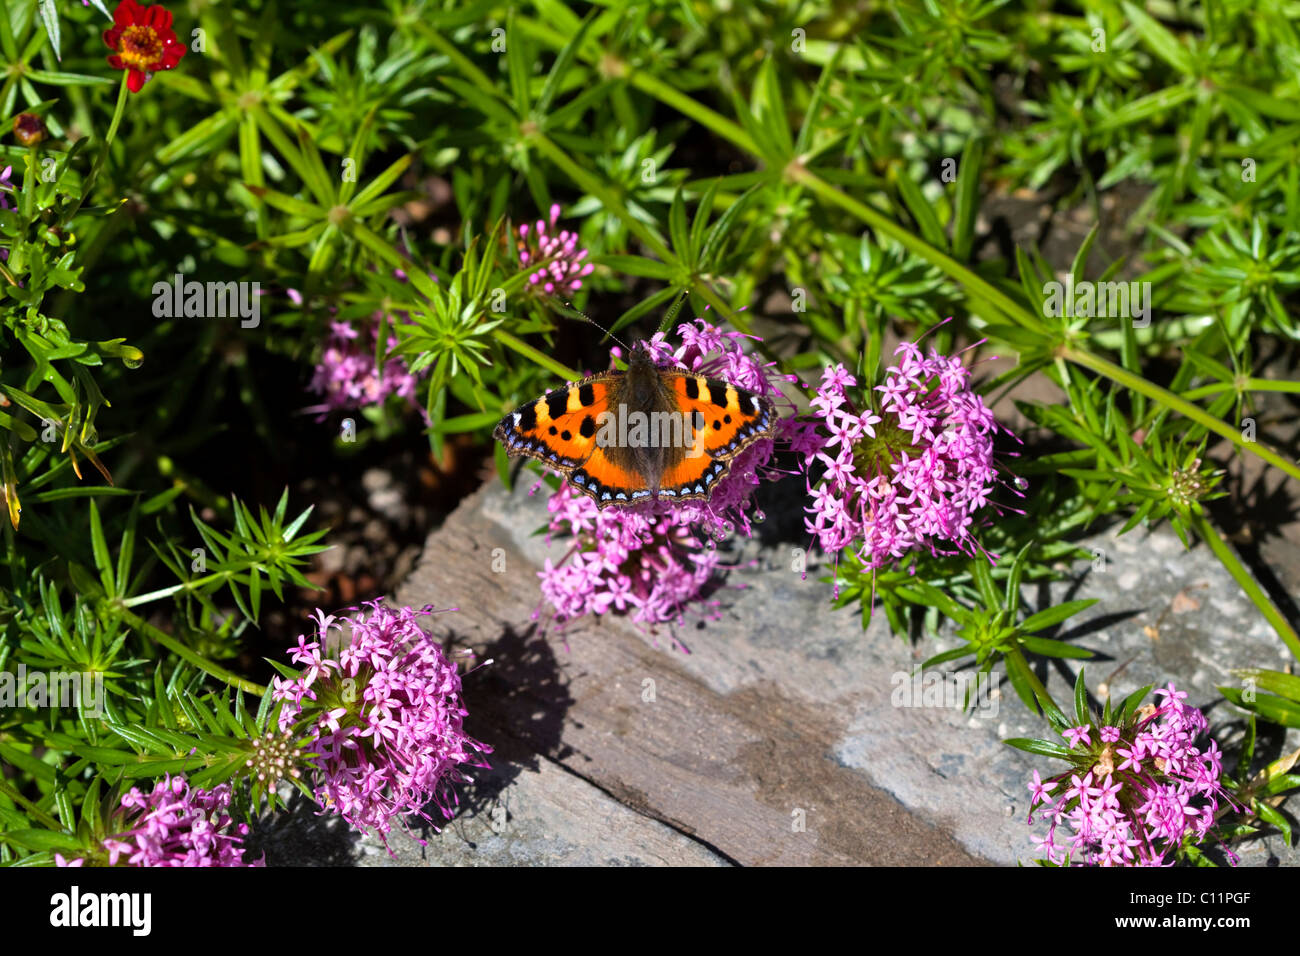 Small Tortoiseshell butterfly on Creeping Crosswort Stock Photo